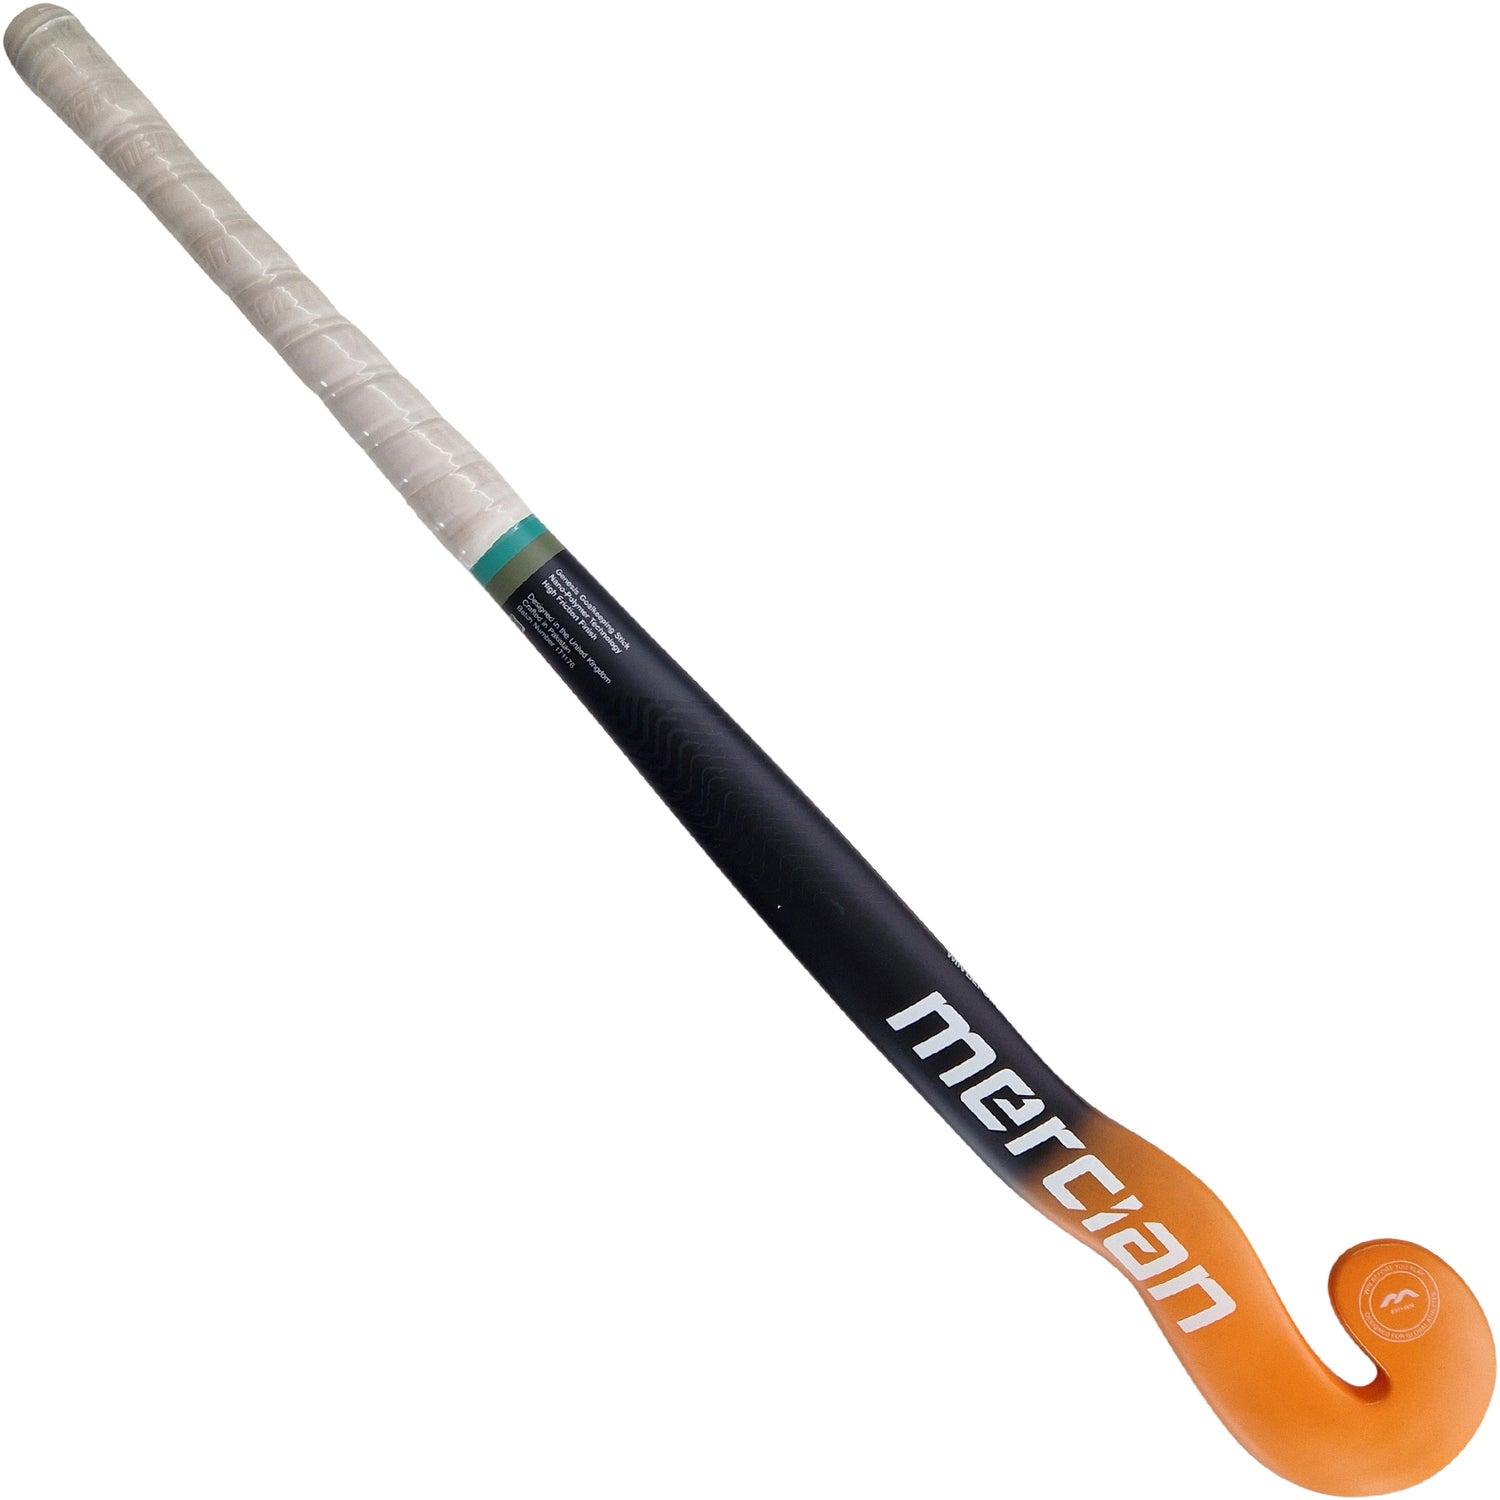 Mercian Genesis CF15 GK Hockey Stick